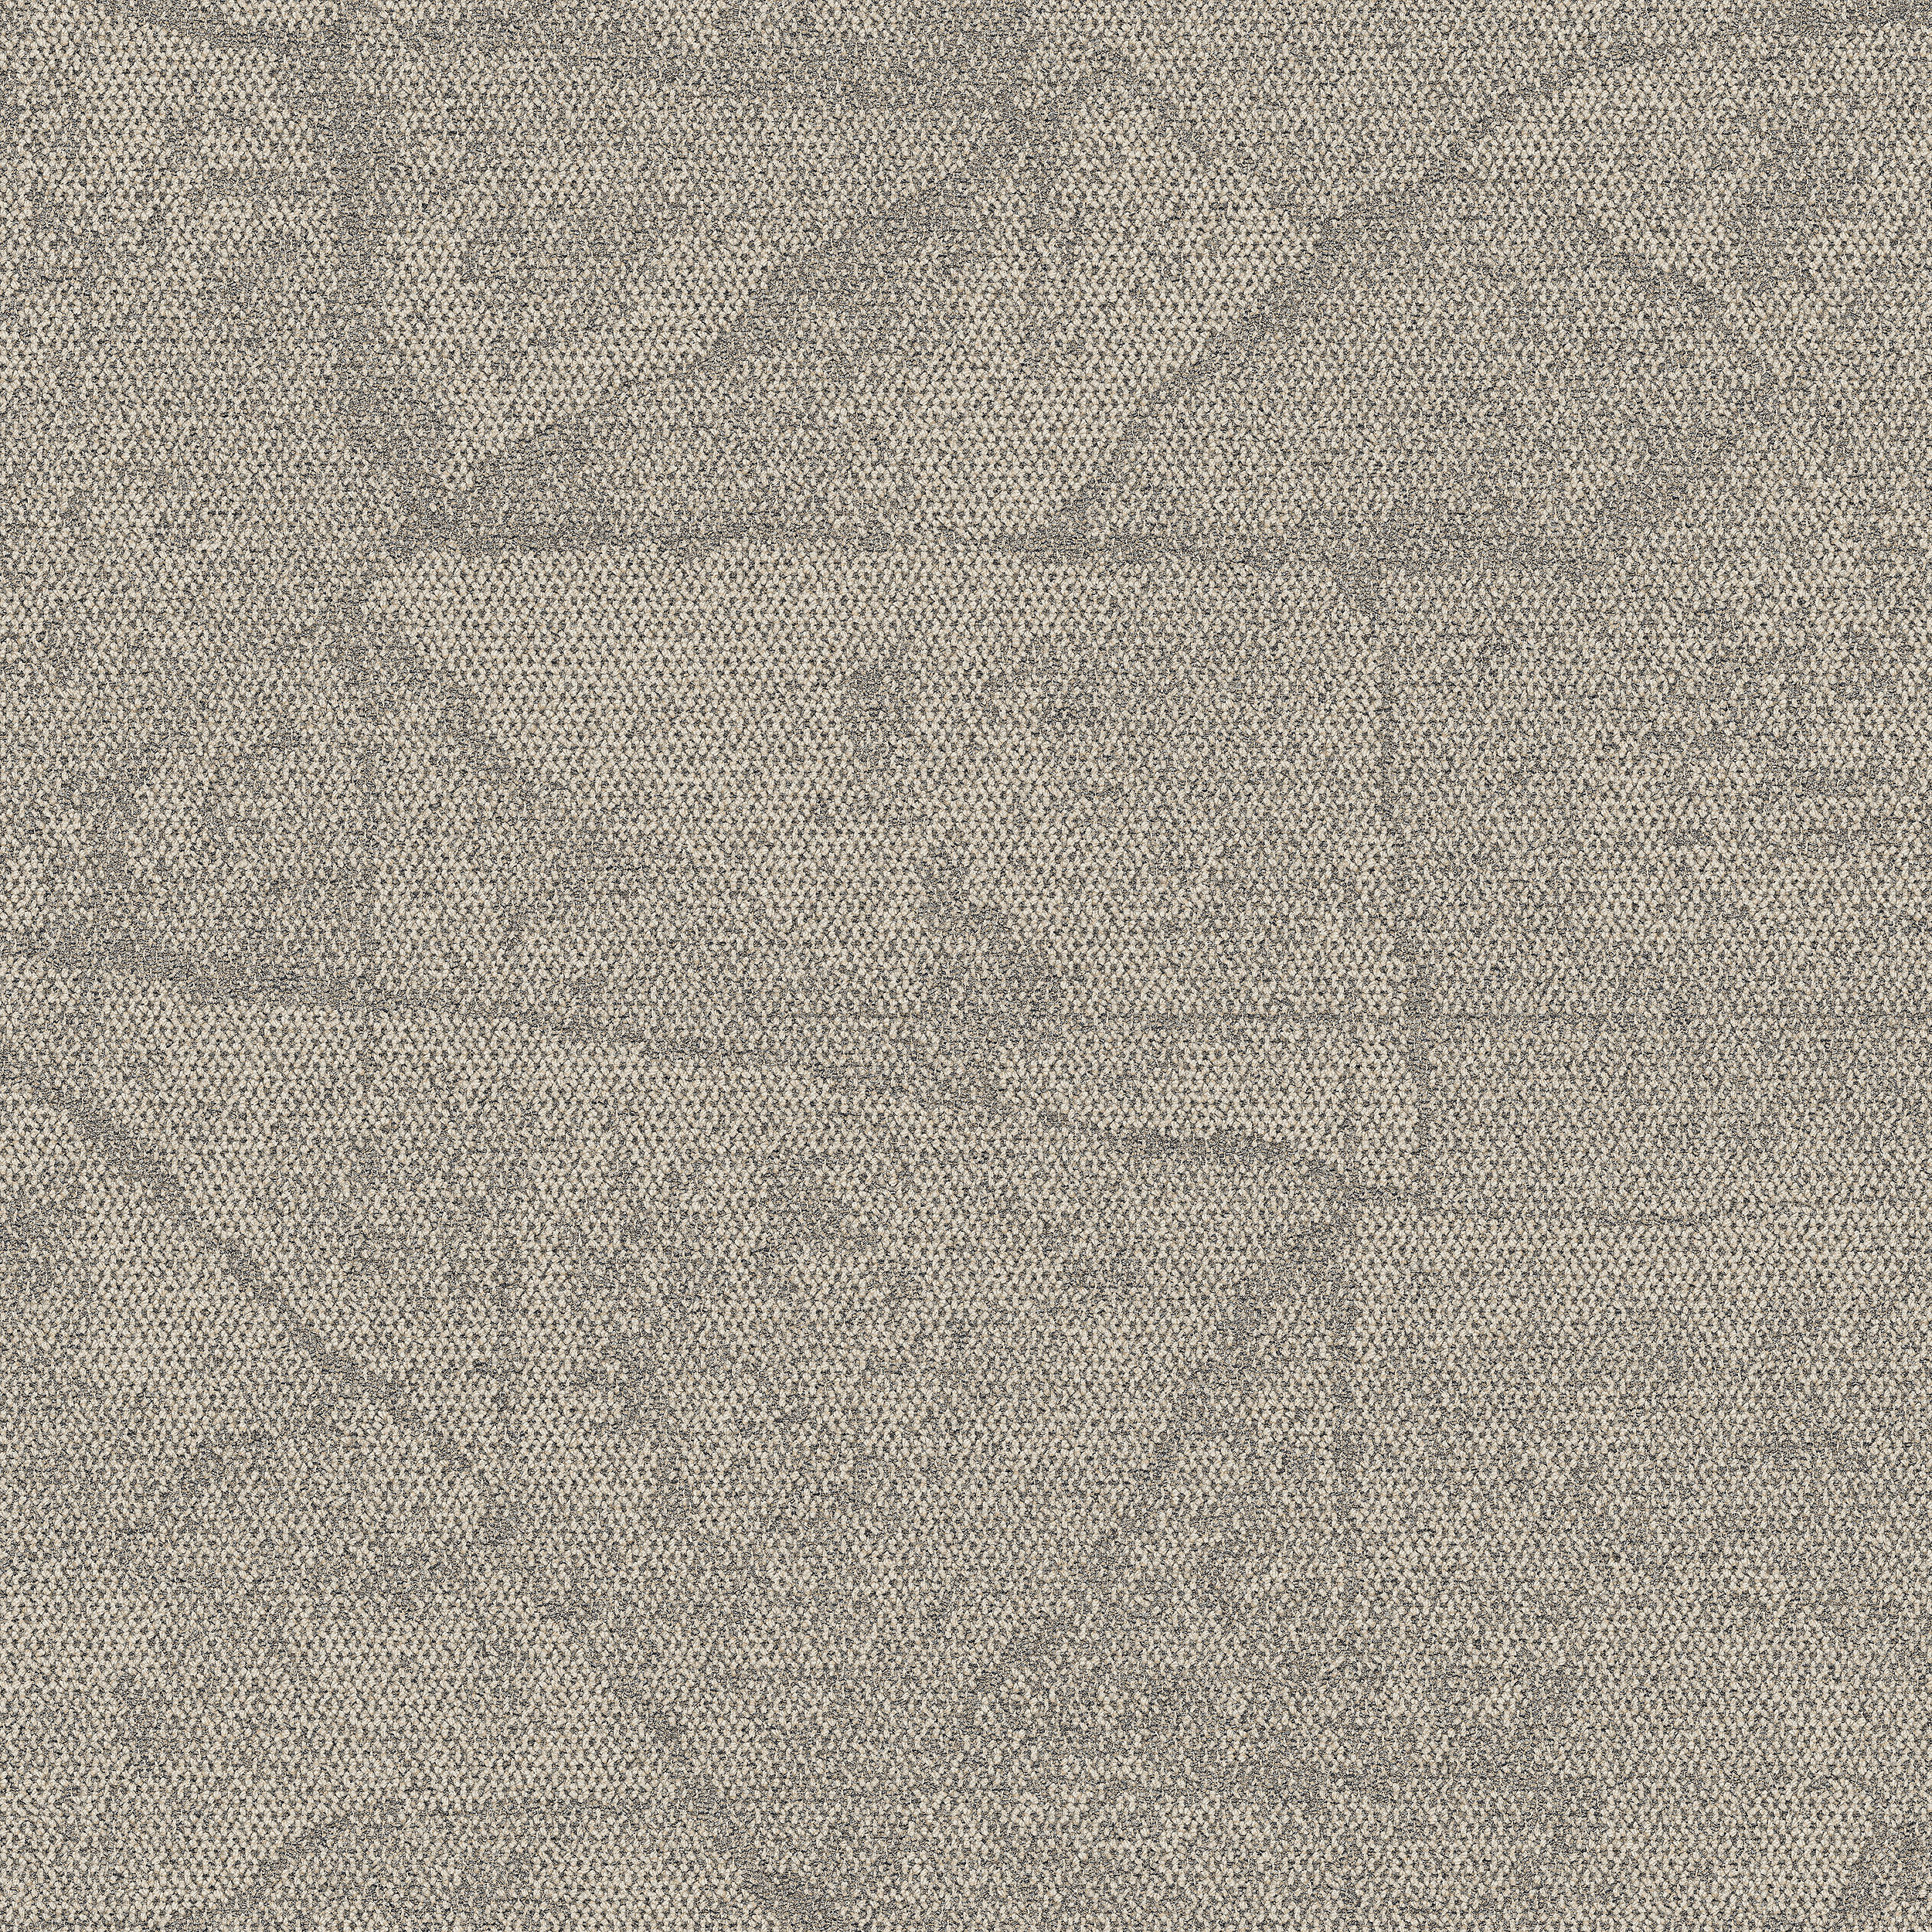 Cap Rock Carpet Tile in Shell image number 4